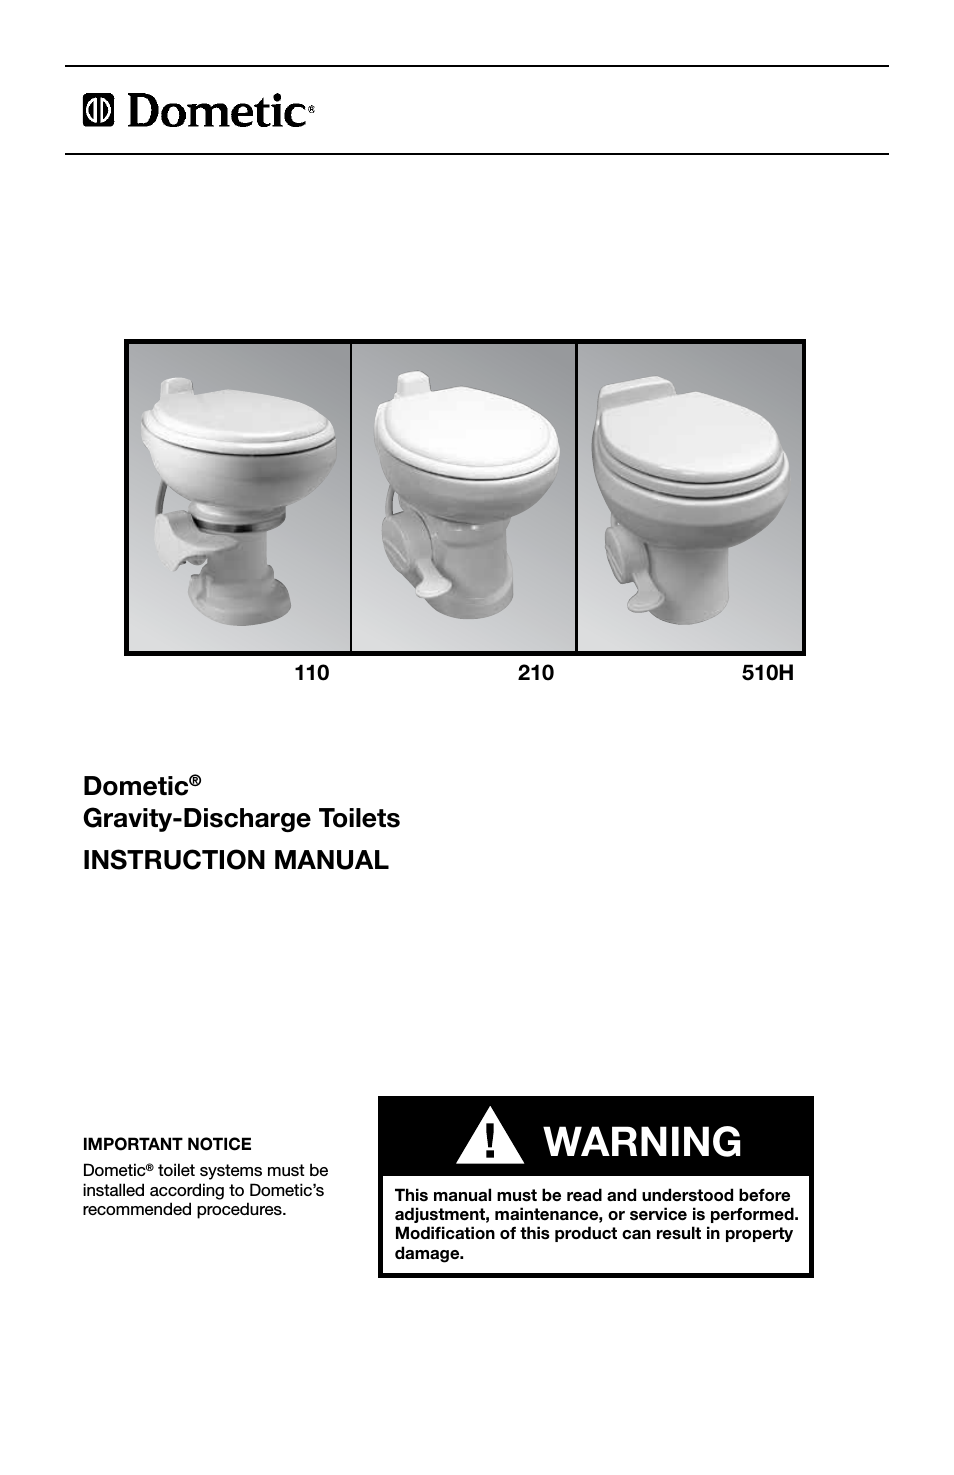 210 Gravity Discharge Toilet